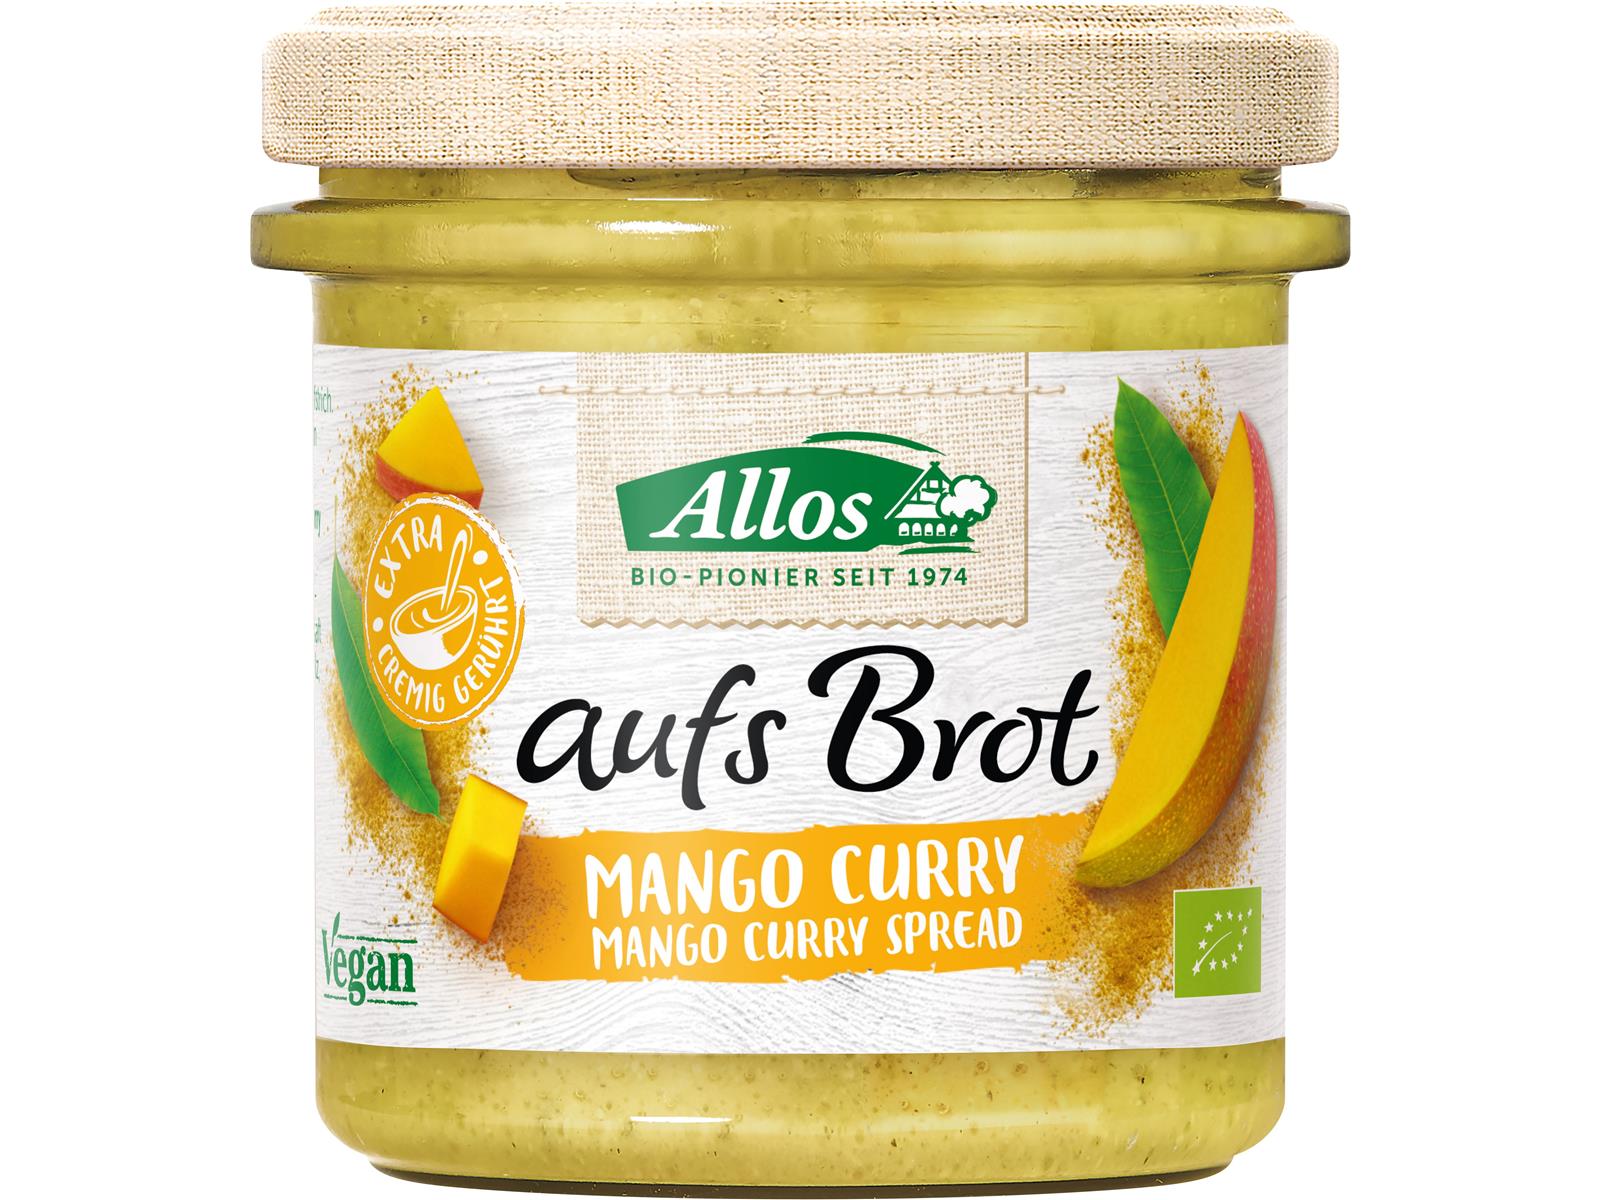 Allos Auf's Brot Mango Curry 140g